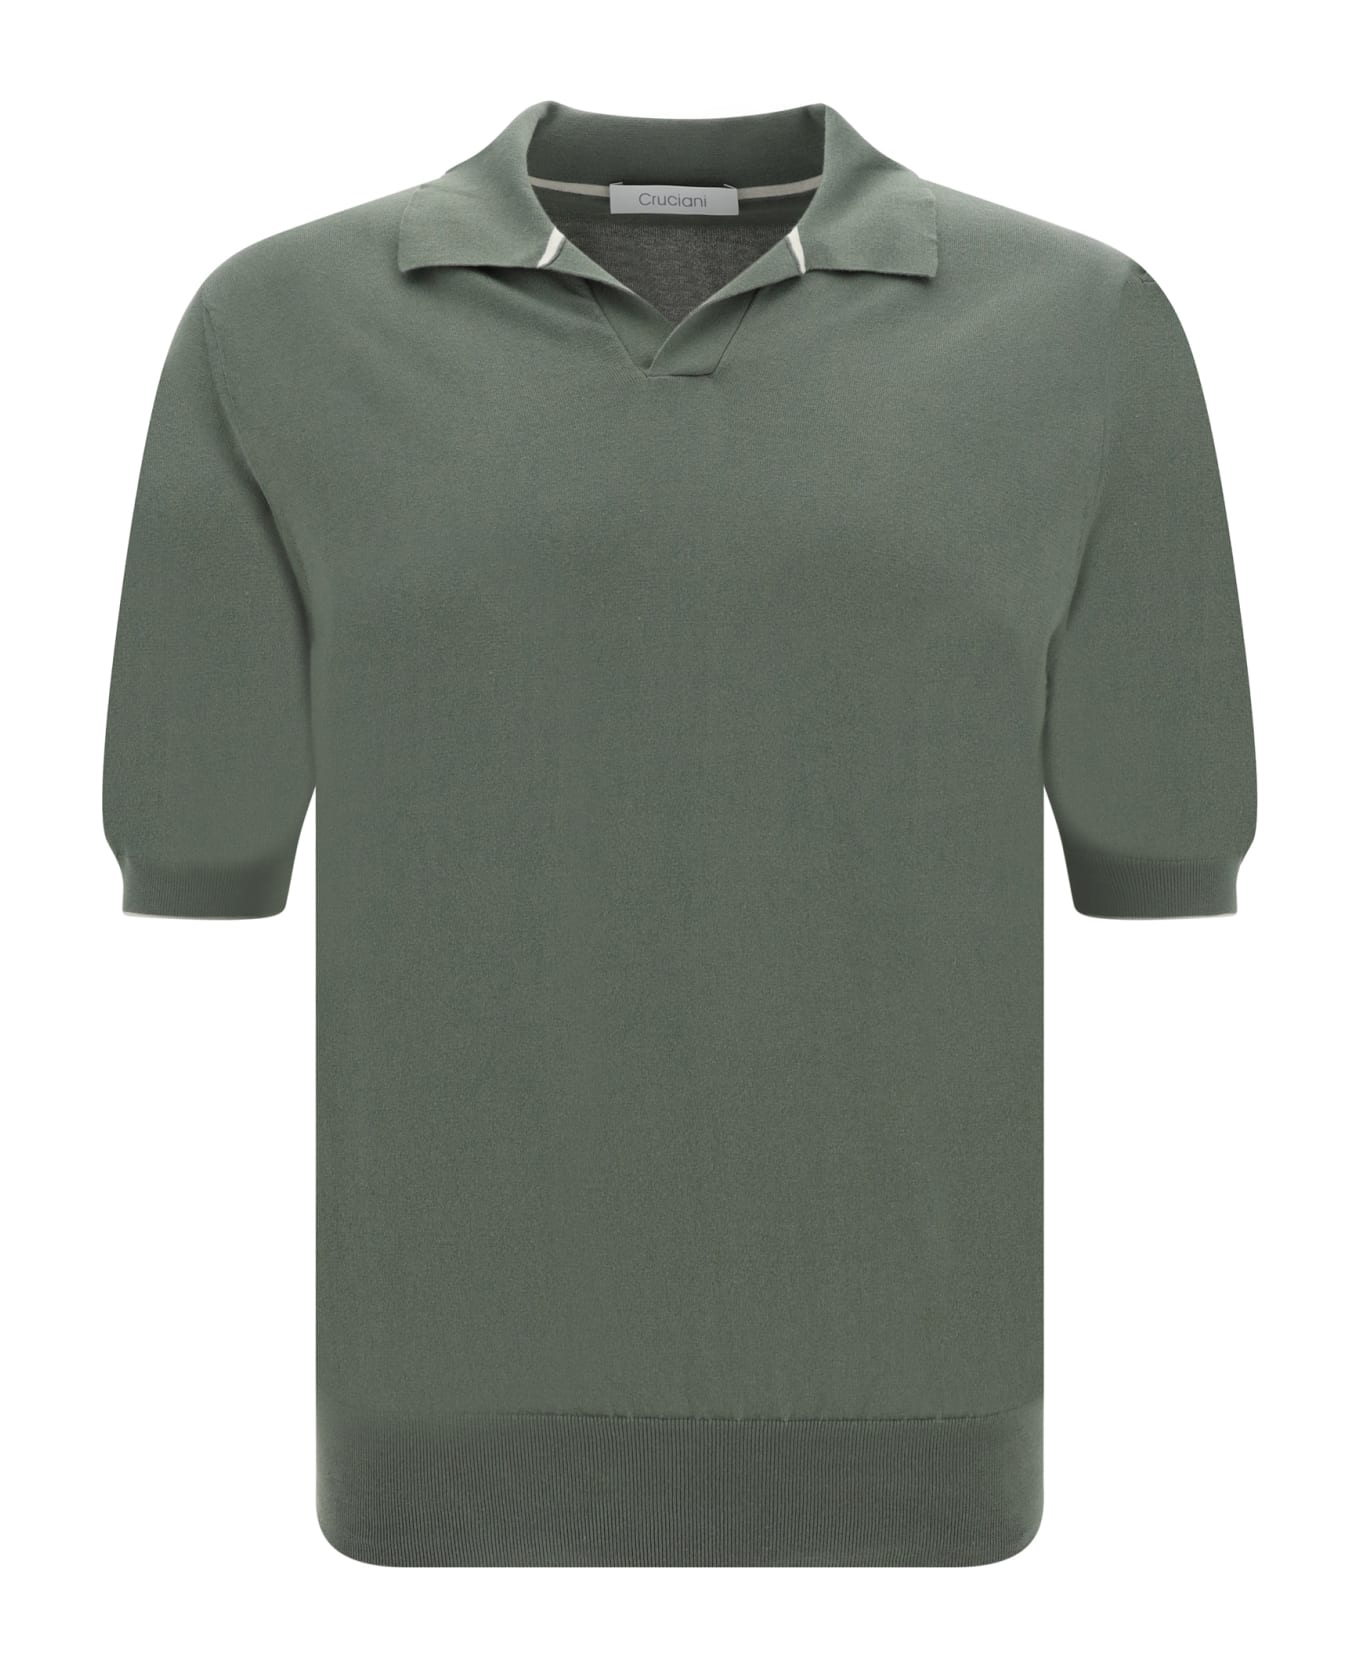 Cruciani Polo Shirt - 41e80018